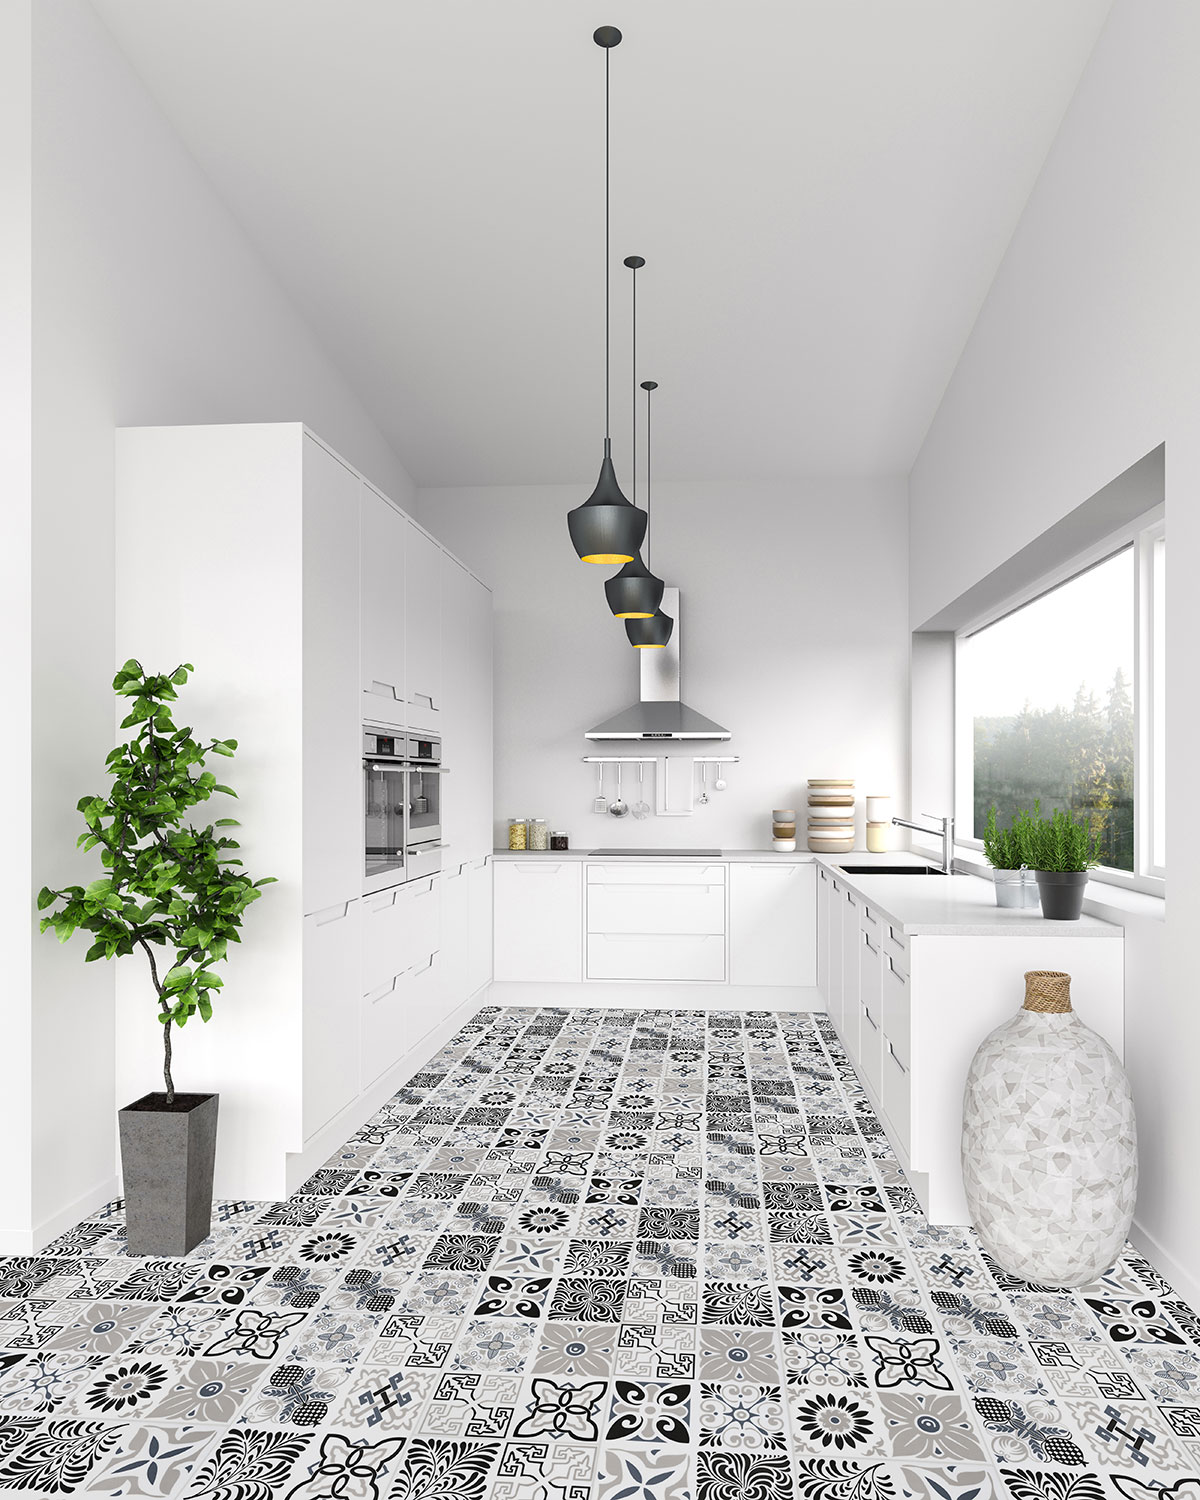 Windsor Isle Trecento Luxury Vinyl Tile floor in kitchen